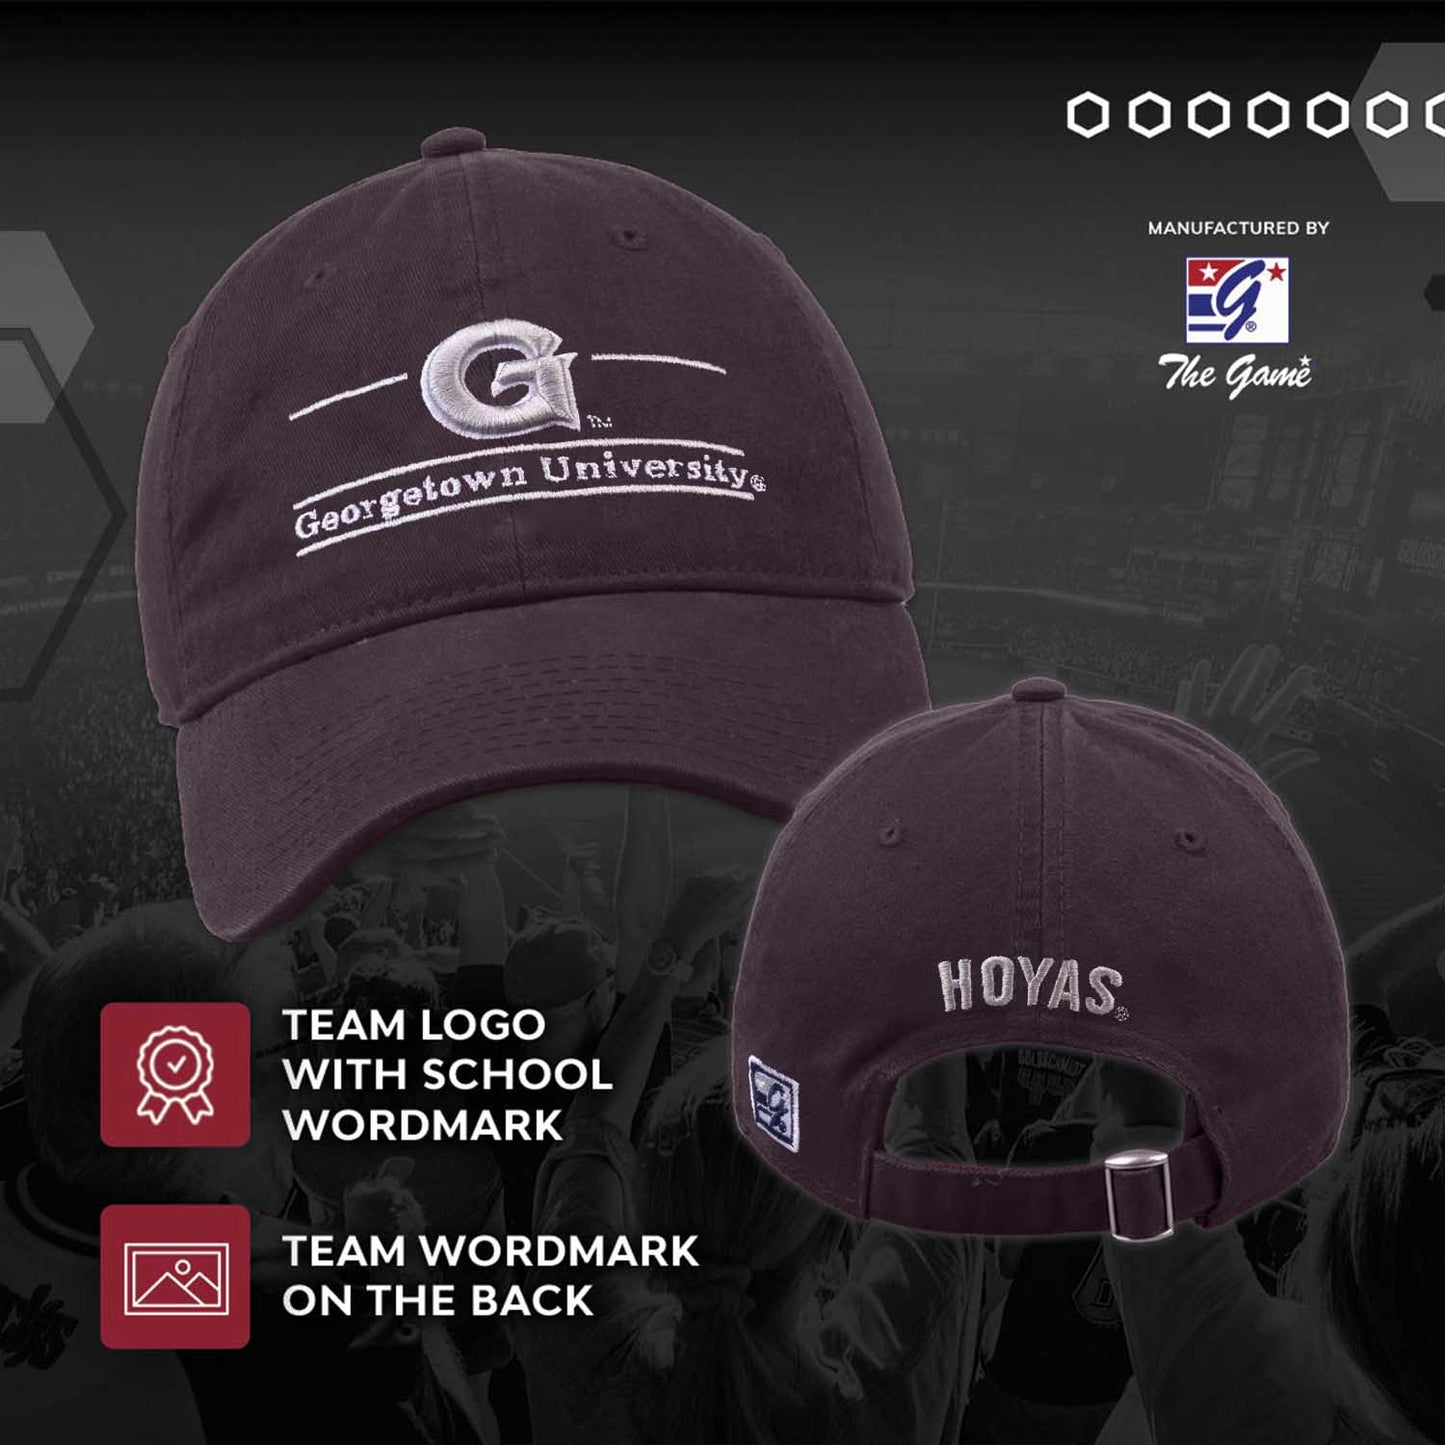 Georgetown Hoyas NCAA Adult Bar Hat - Navy